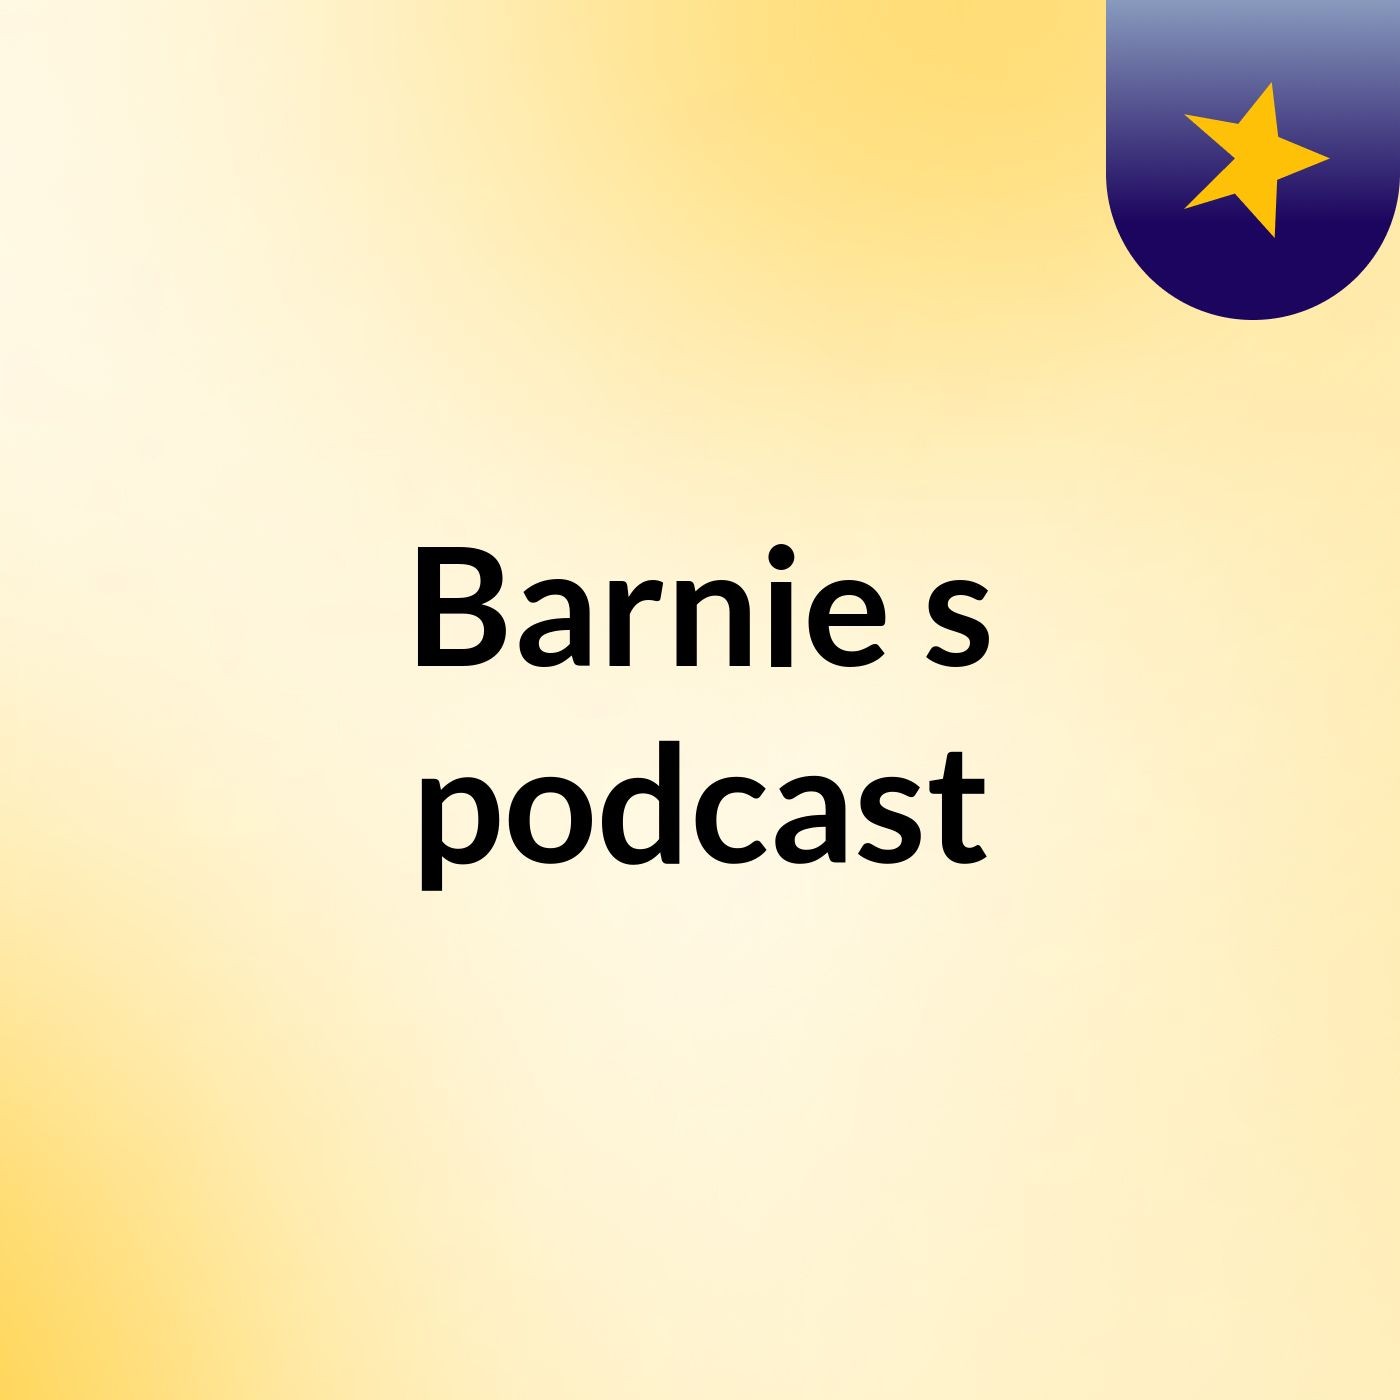 Barnie's podcast